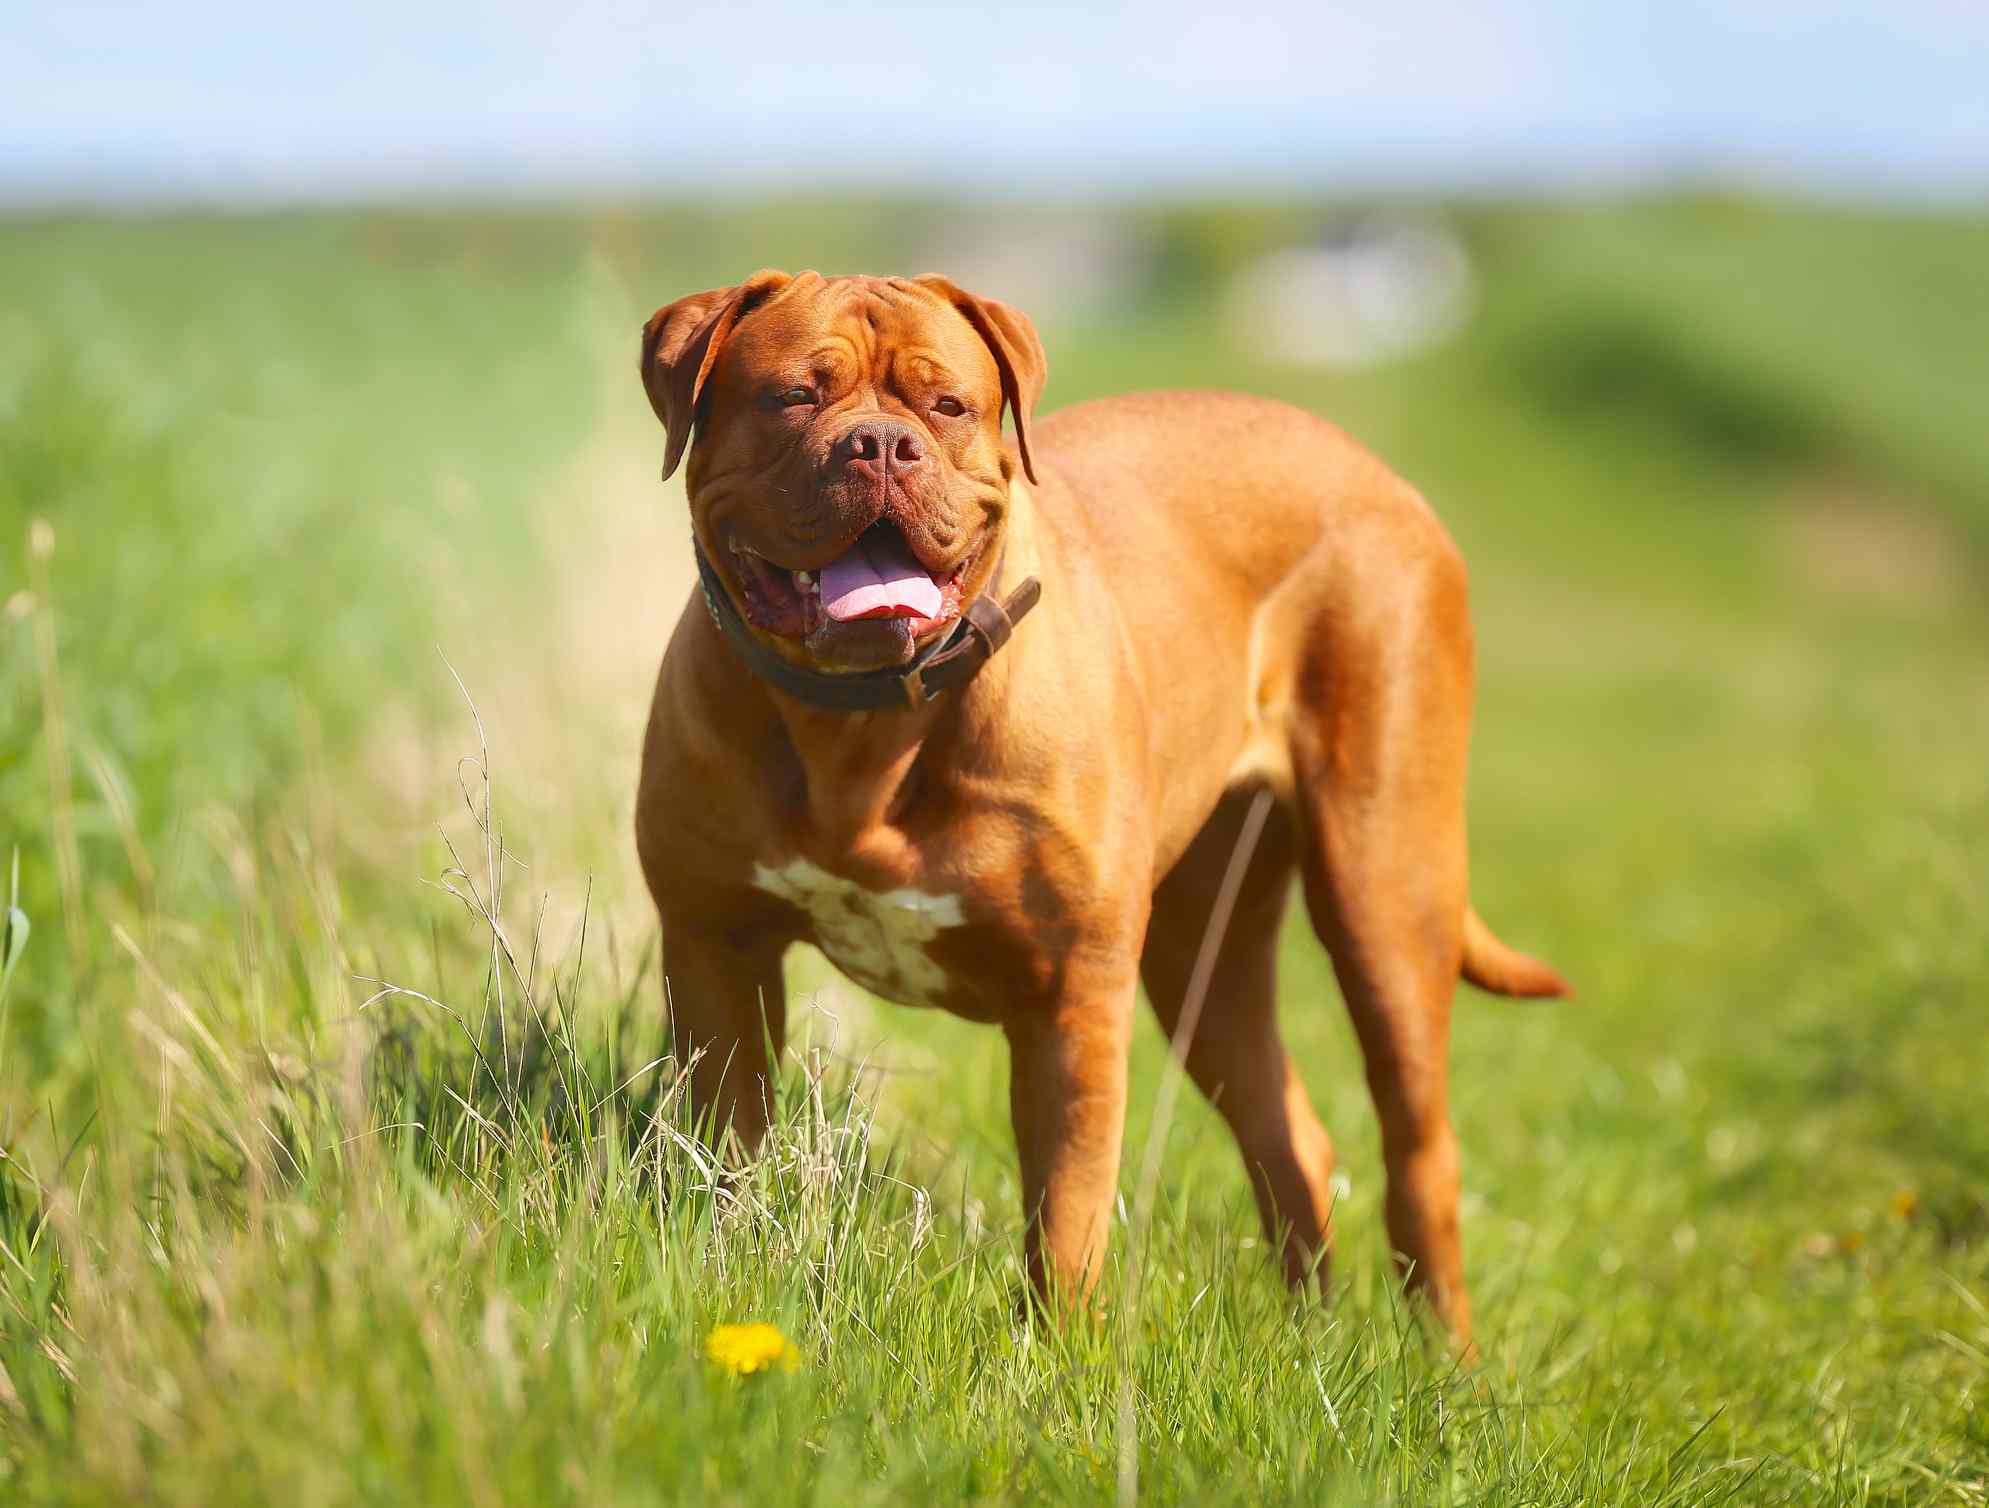 Dogue De Bordeaux standing in a grassy field